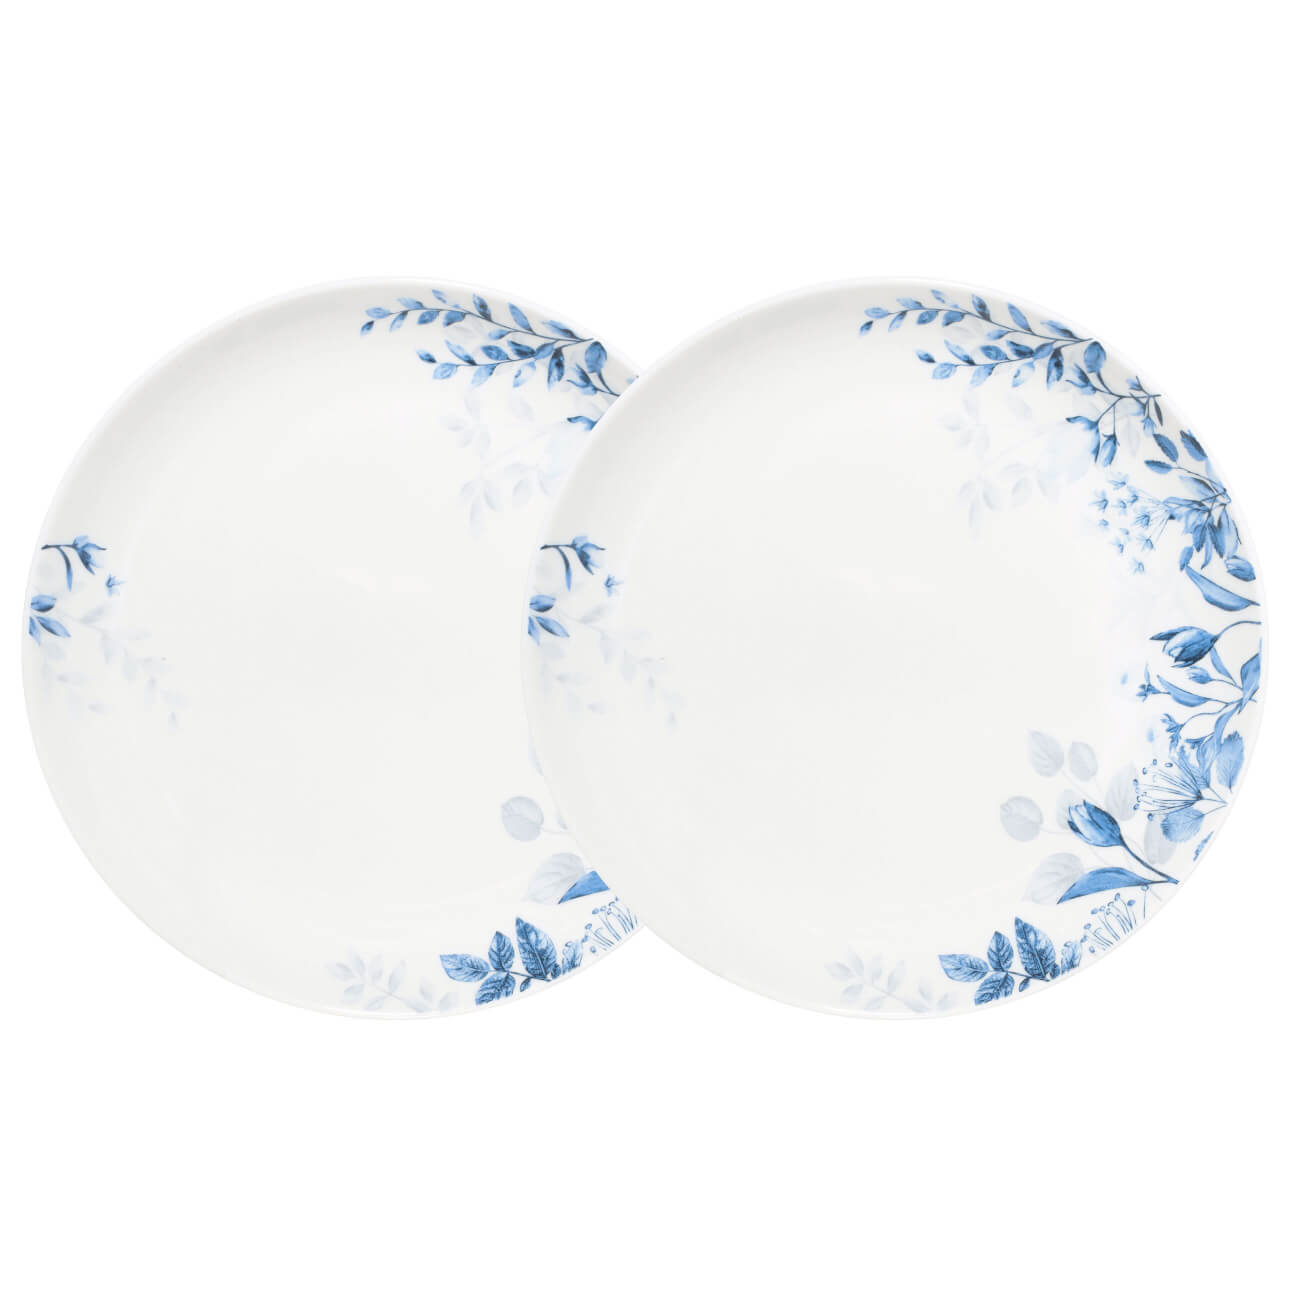 Тарелка закусочная, 21 см, 2 шт, фарфор N, белая, Синие цветы, Royal flower тарелка лилия